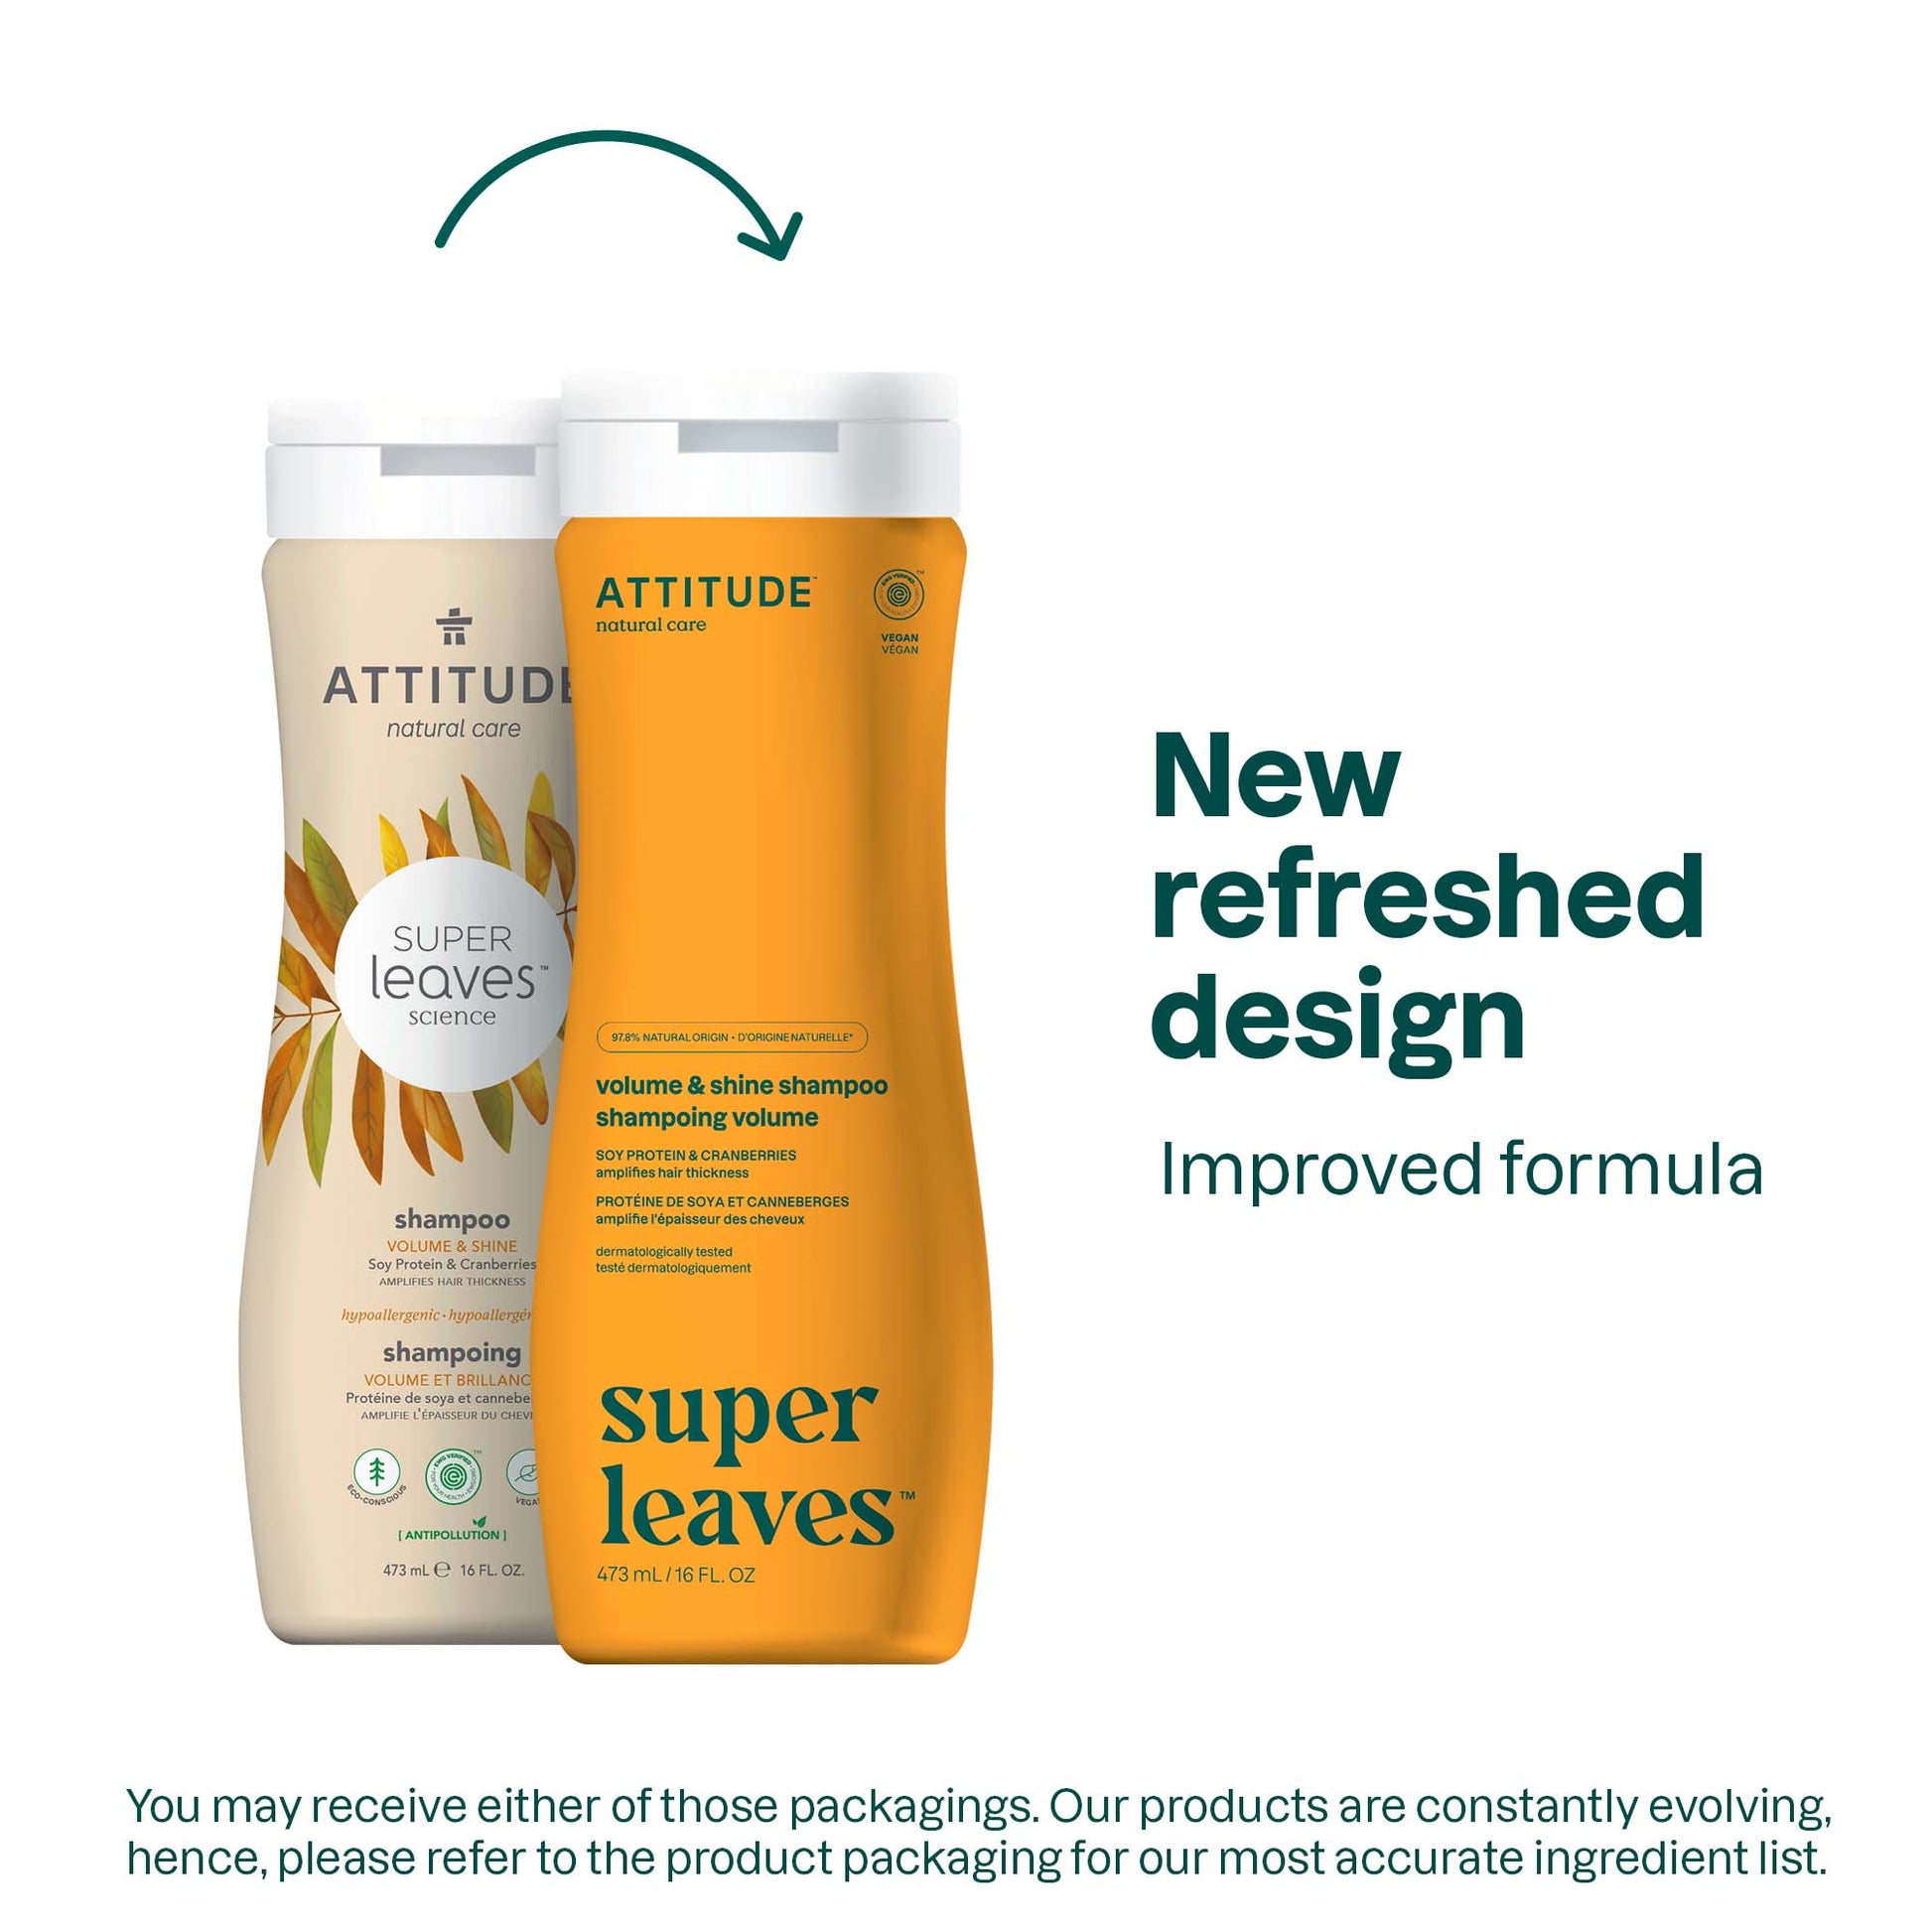 ATTITUDE Super leaves™ Shampoo Volume & Shine Amplifies hair thickness 11008_en? 16 FL. OZ.